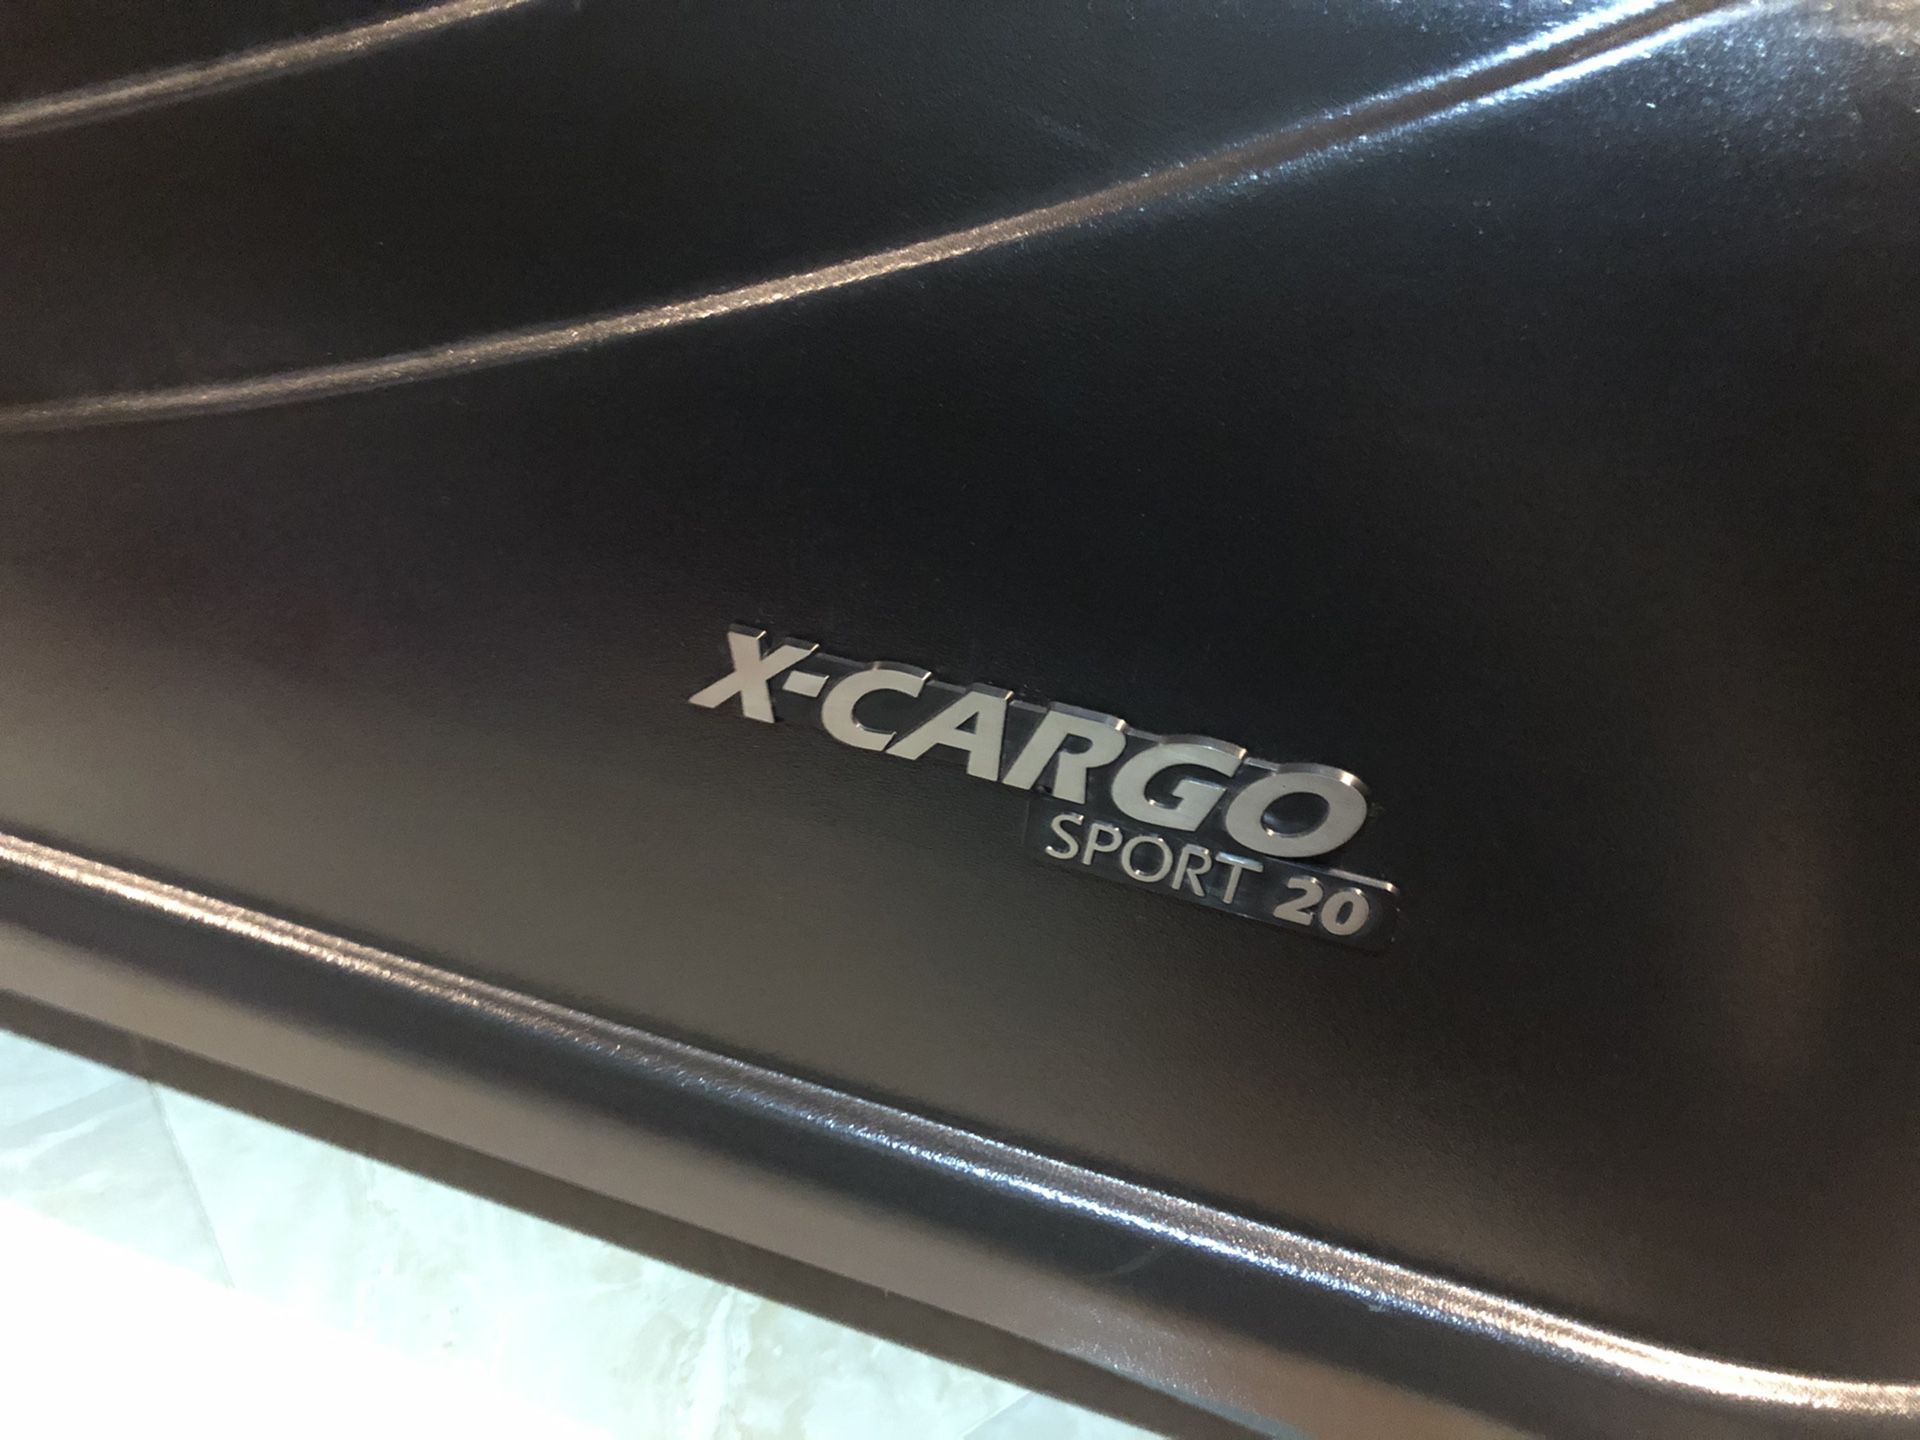 Sears x-cargo sport 20 car top carrier